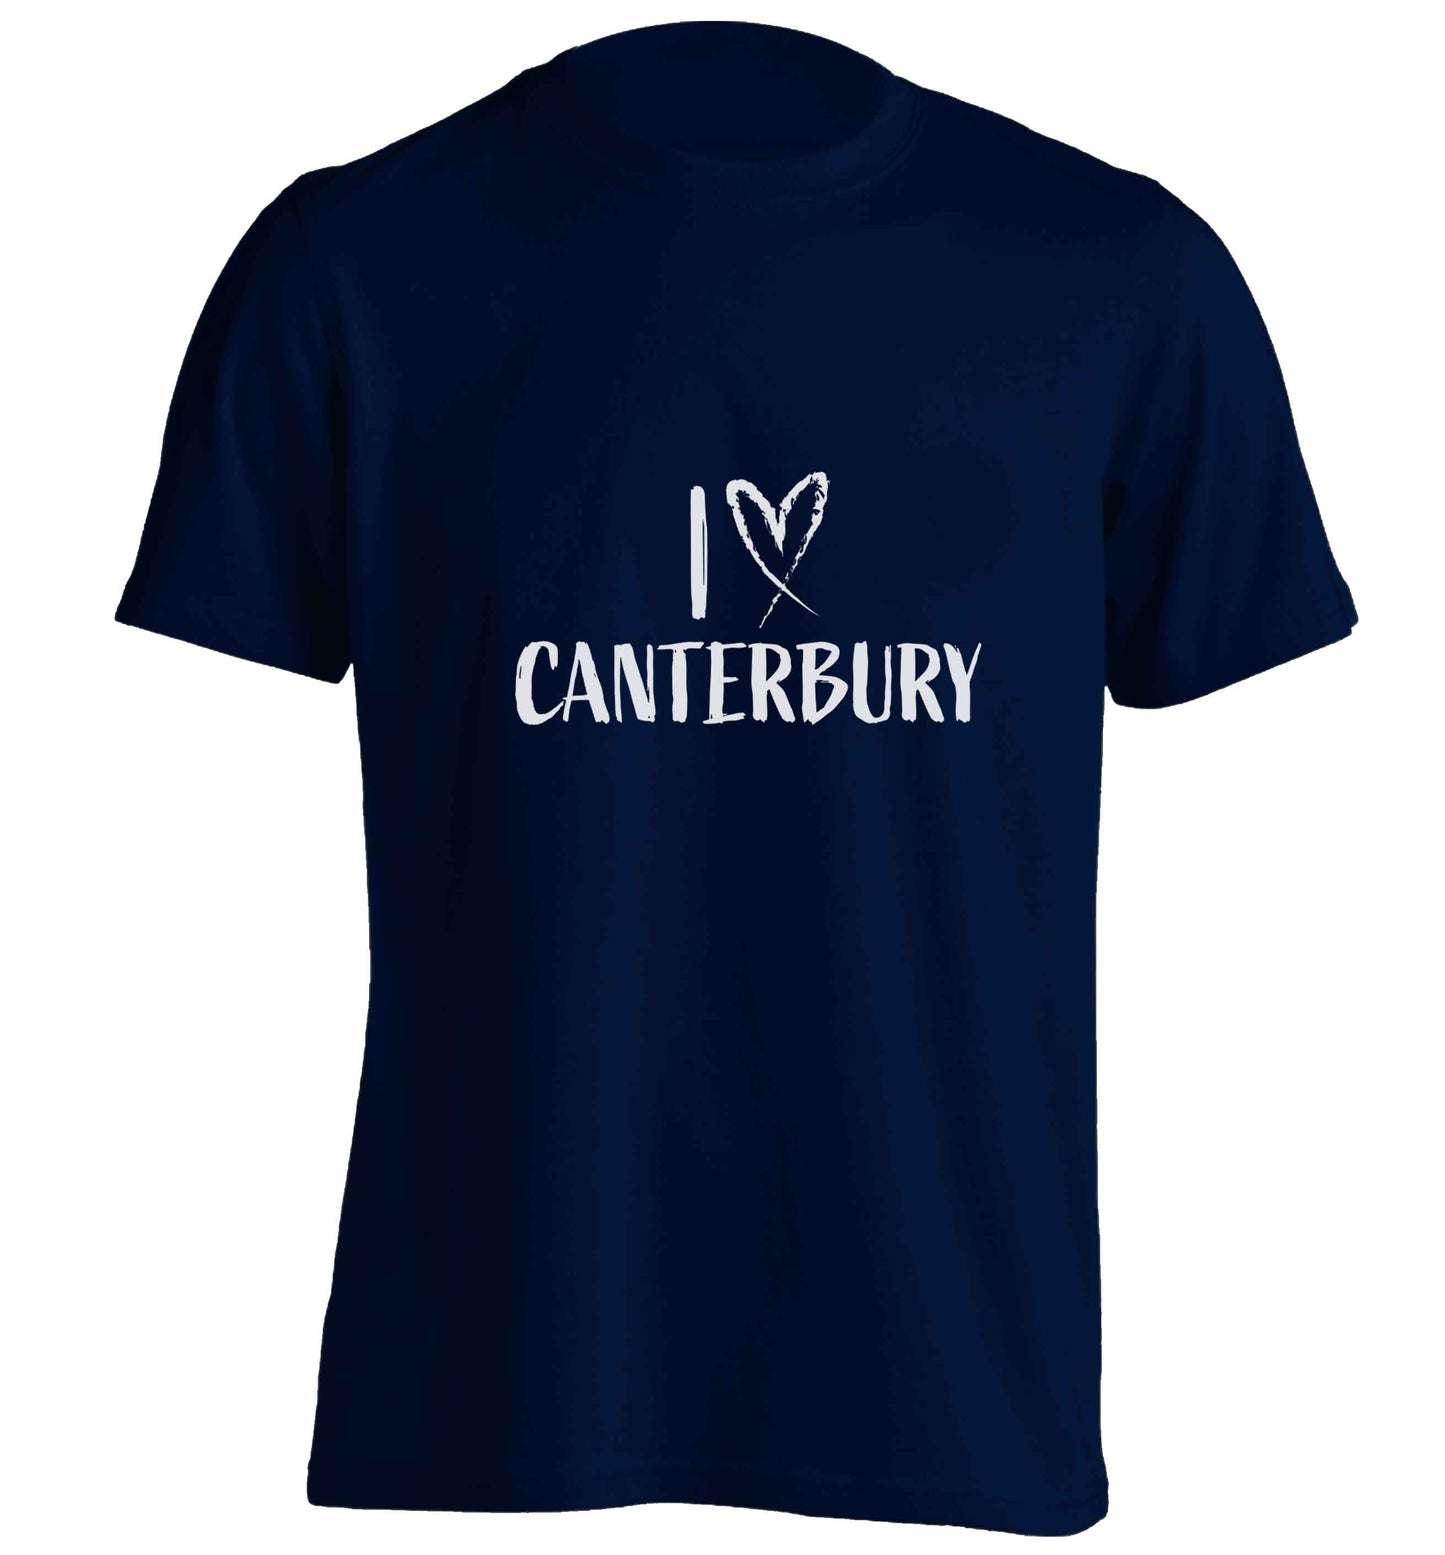 I love Canterbury adults unisex navy Tshirt 2XL